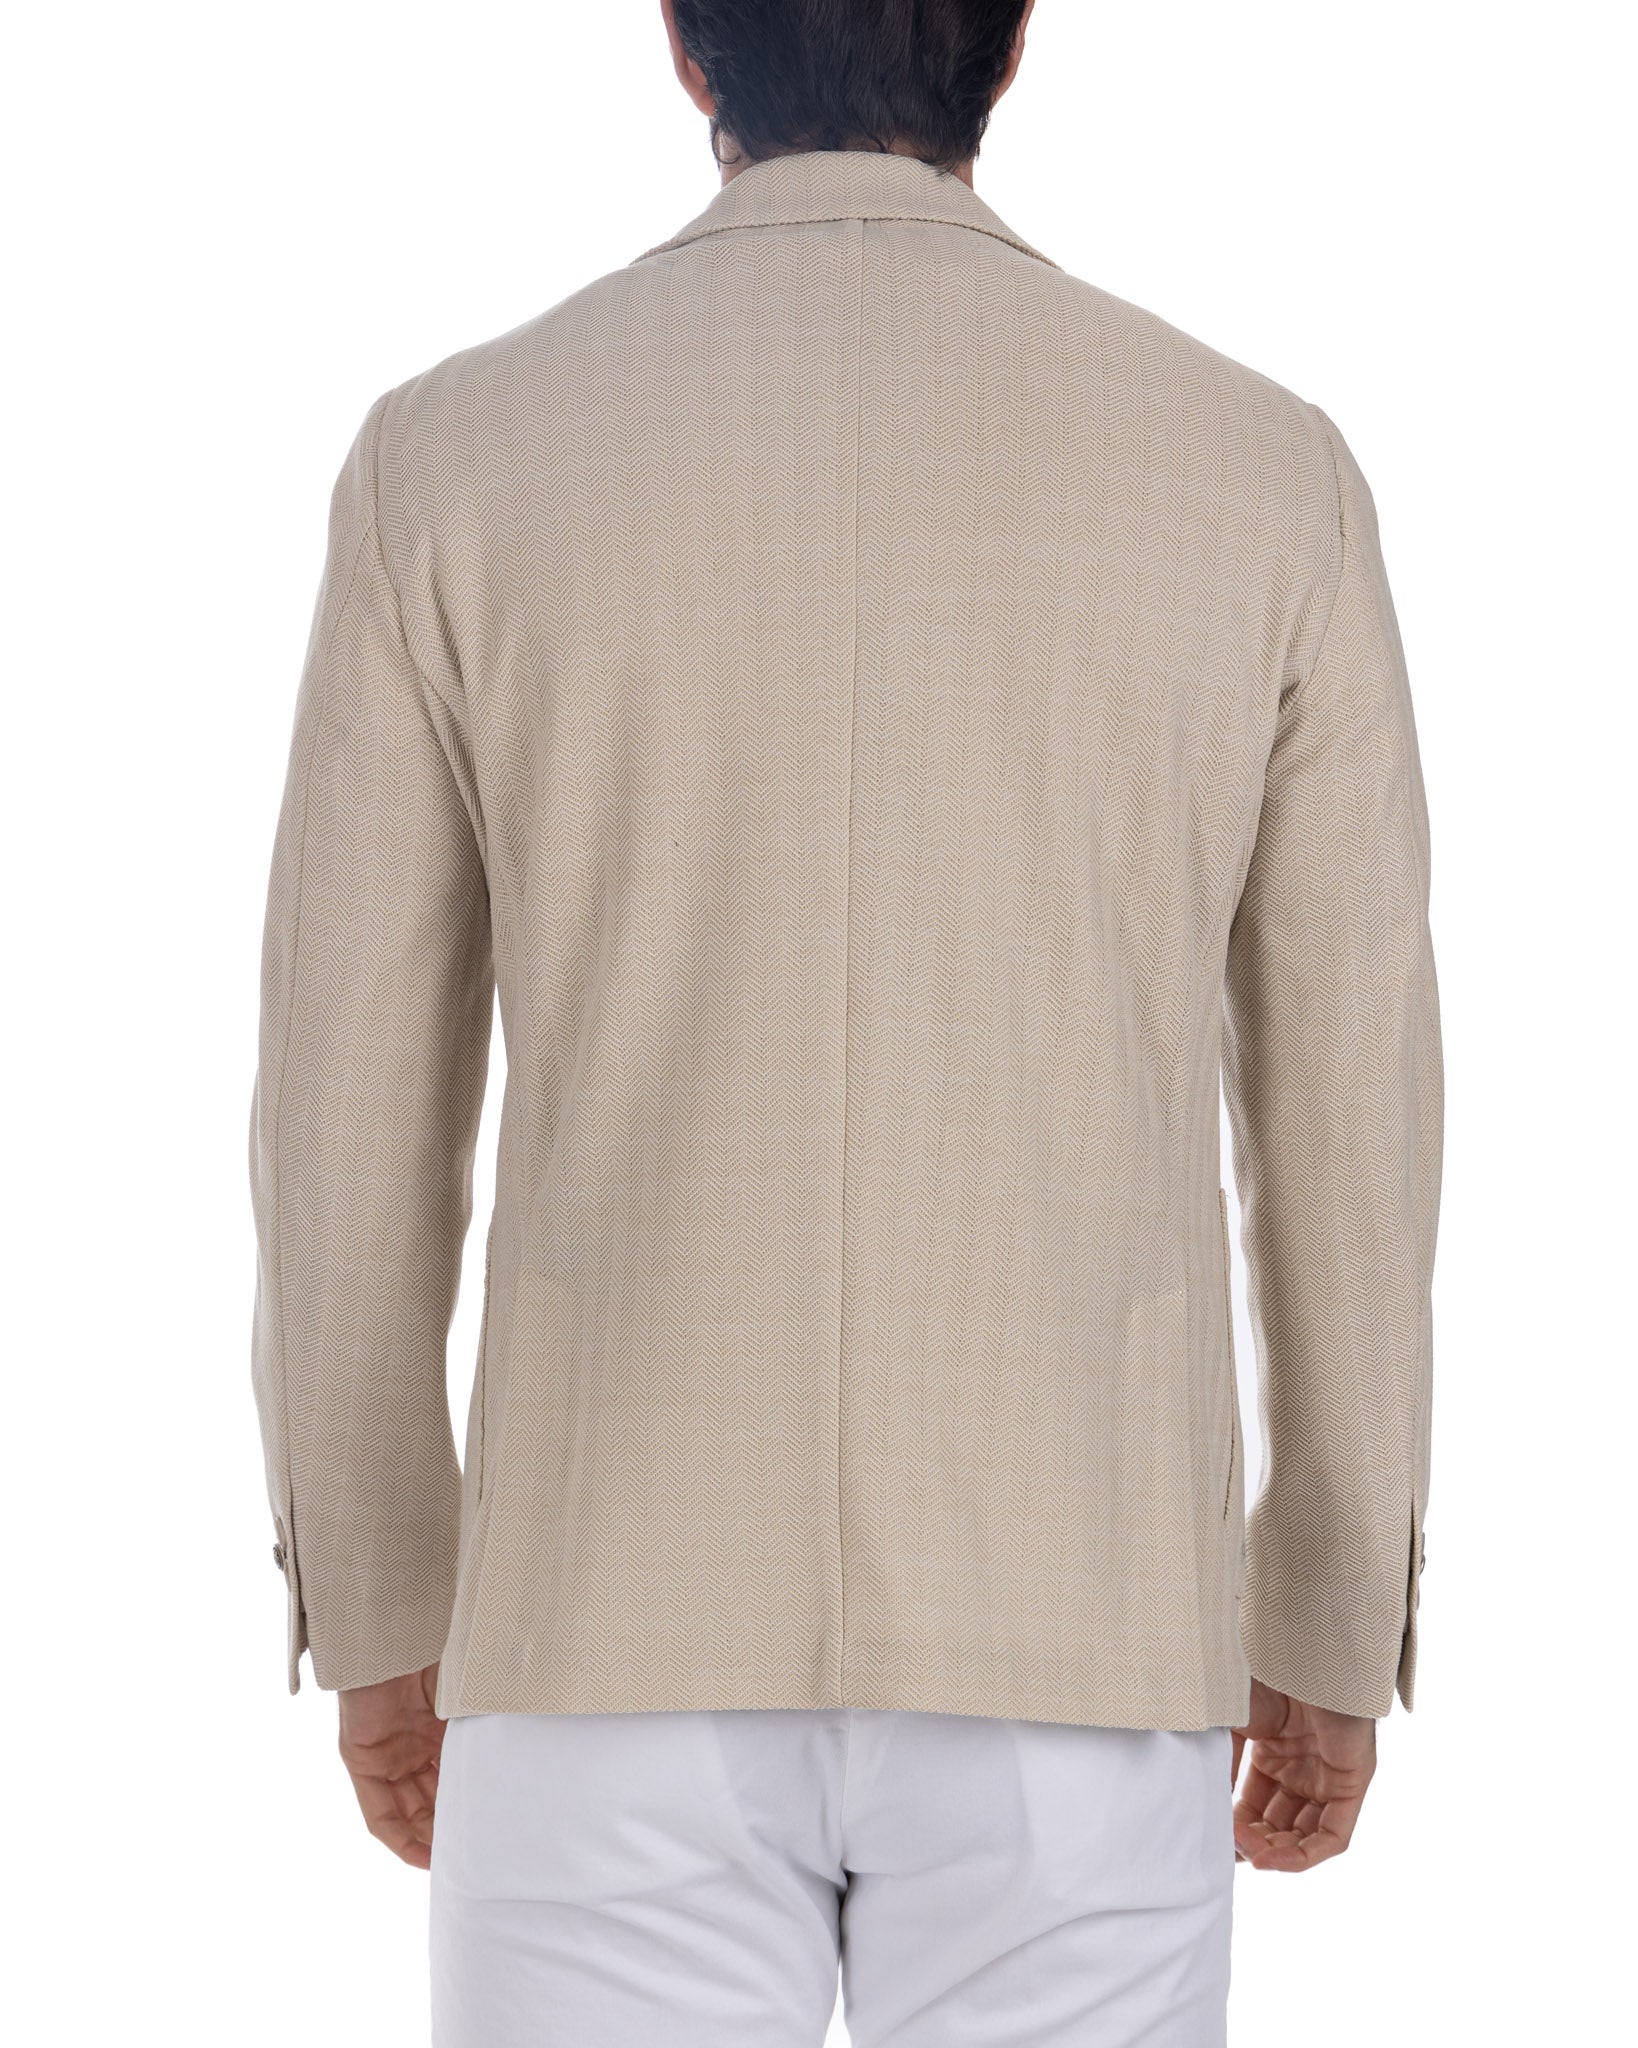 Noto - beige solaro single-breasted jacket